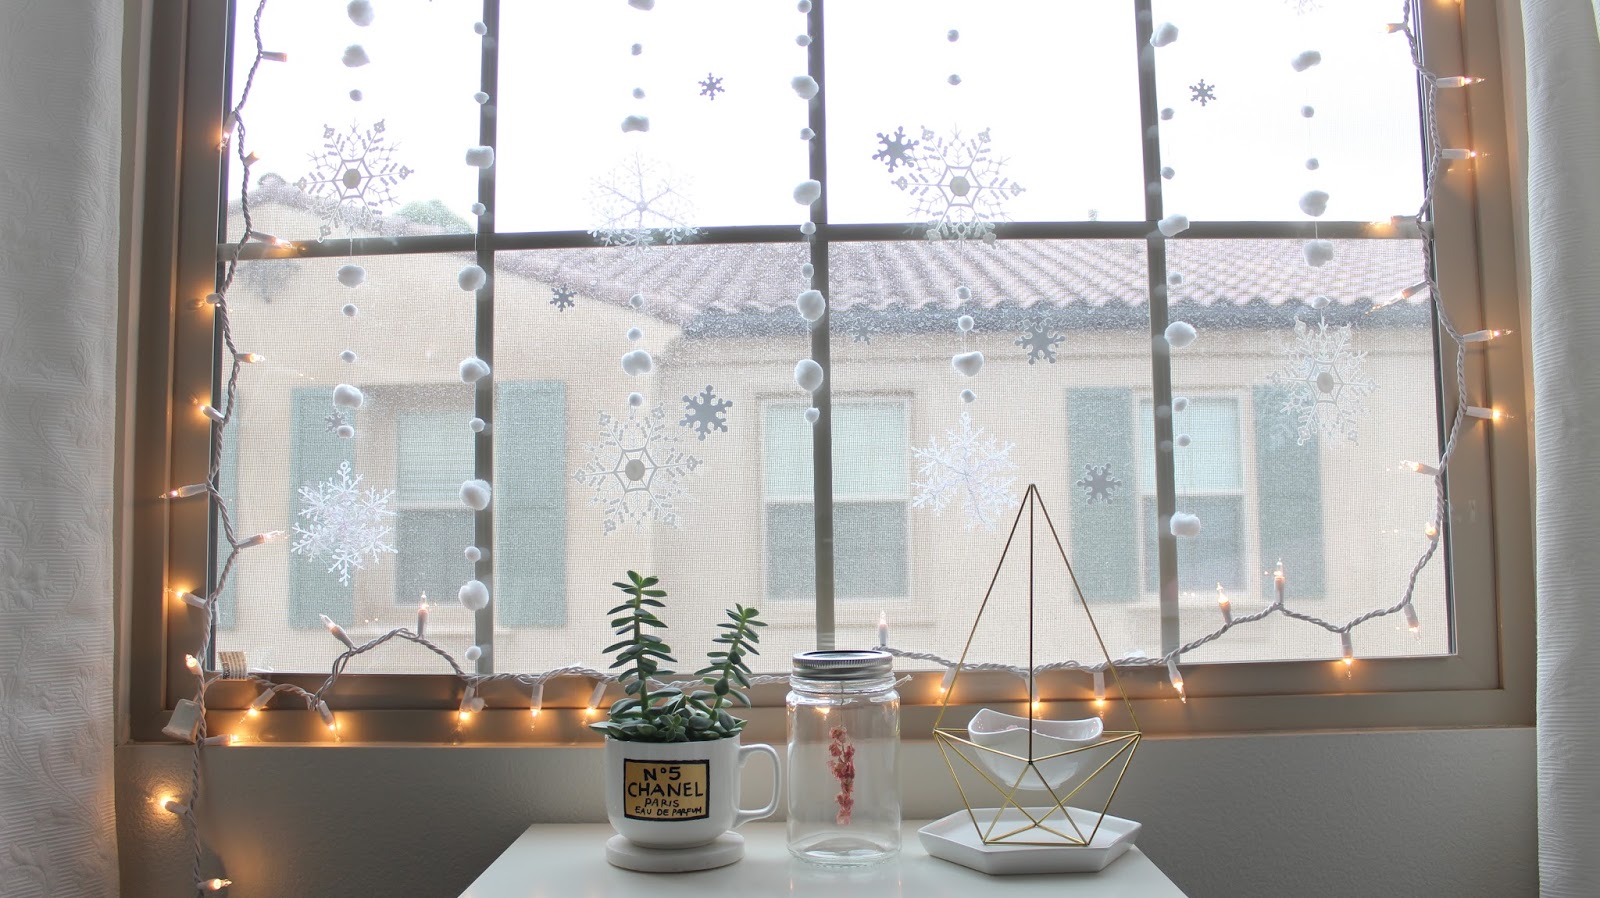 DIY Room Decor  DIY Tumblr Inspired Lighted Christmas Window